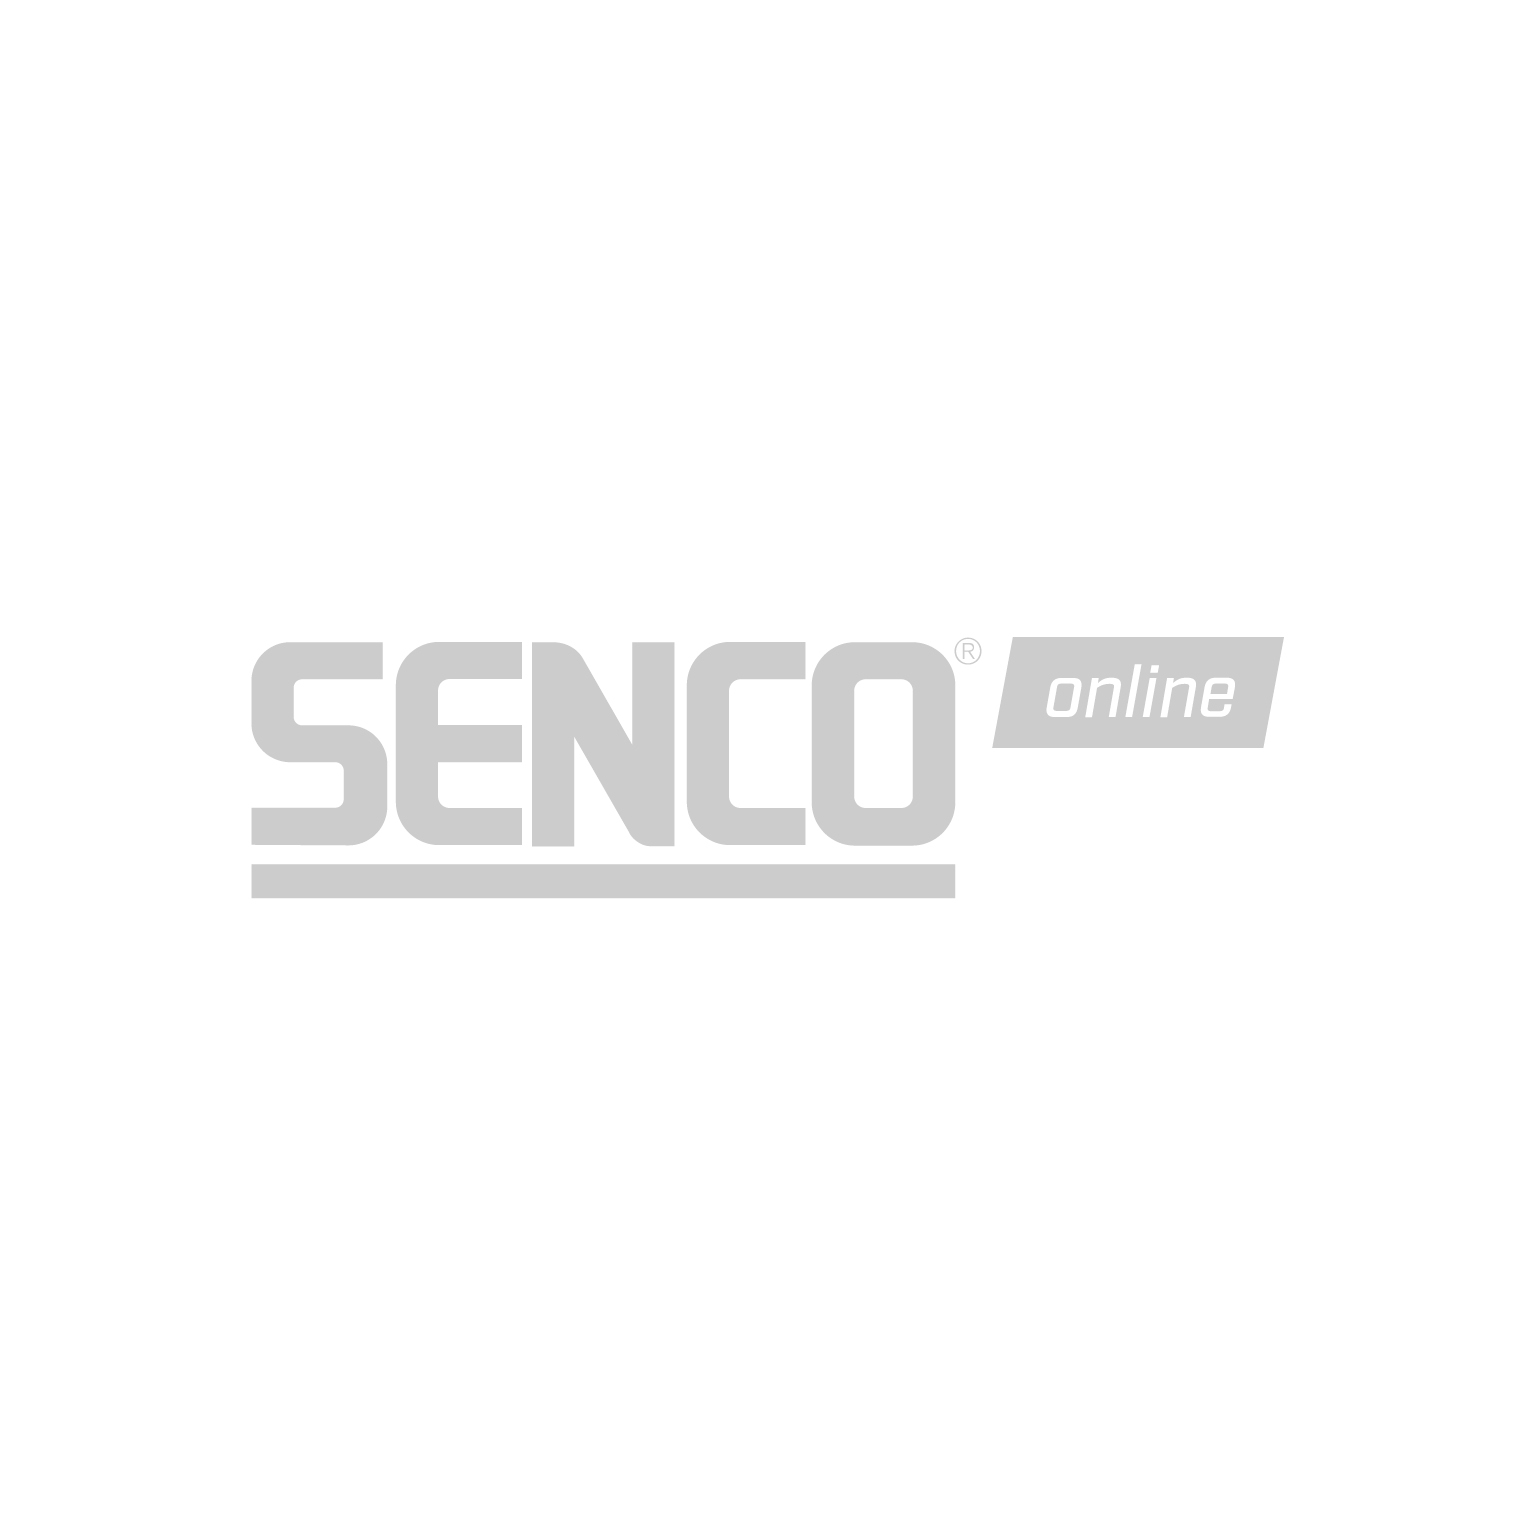 Senco 6G2001N FinishPro 35 MG DA nageltacker afwerktacker - 1